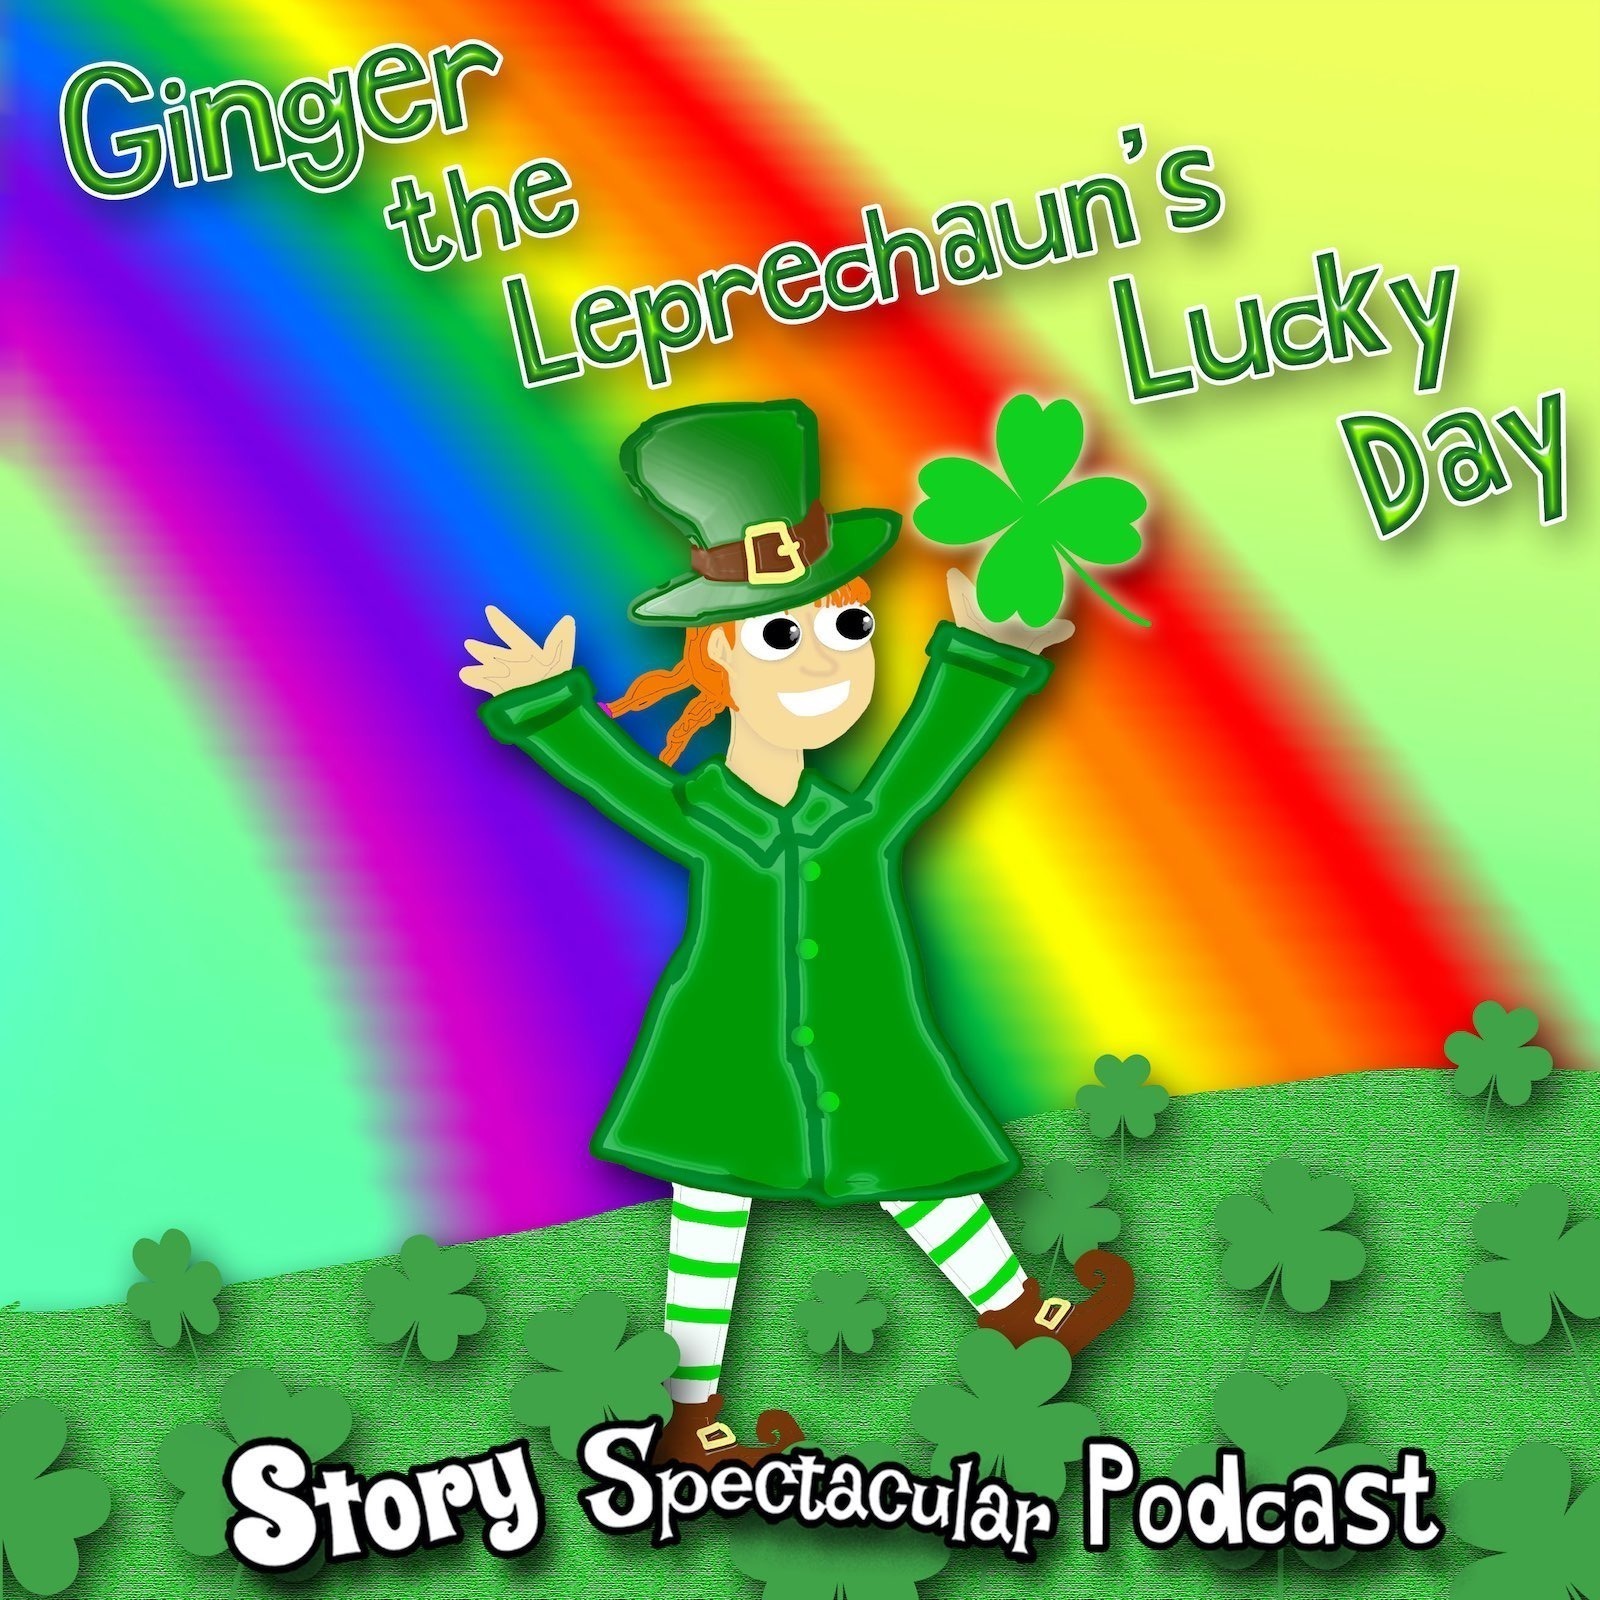 Ginger the Leprechaun's Lucky Day